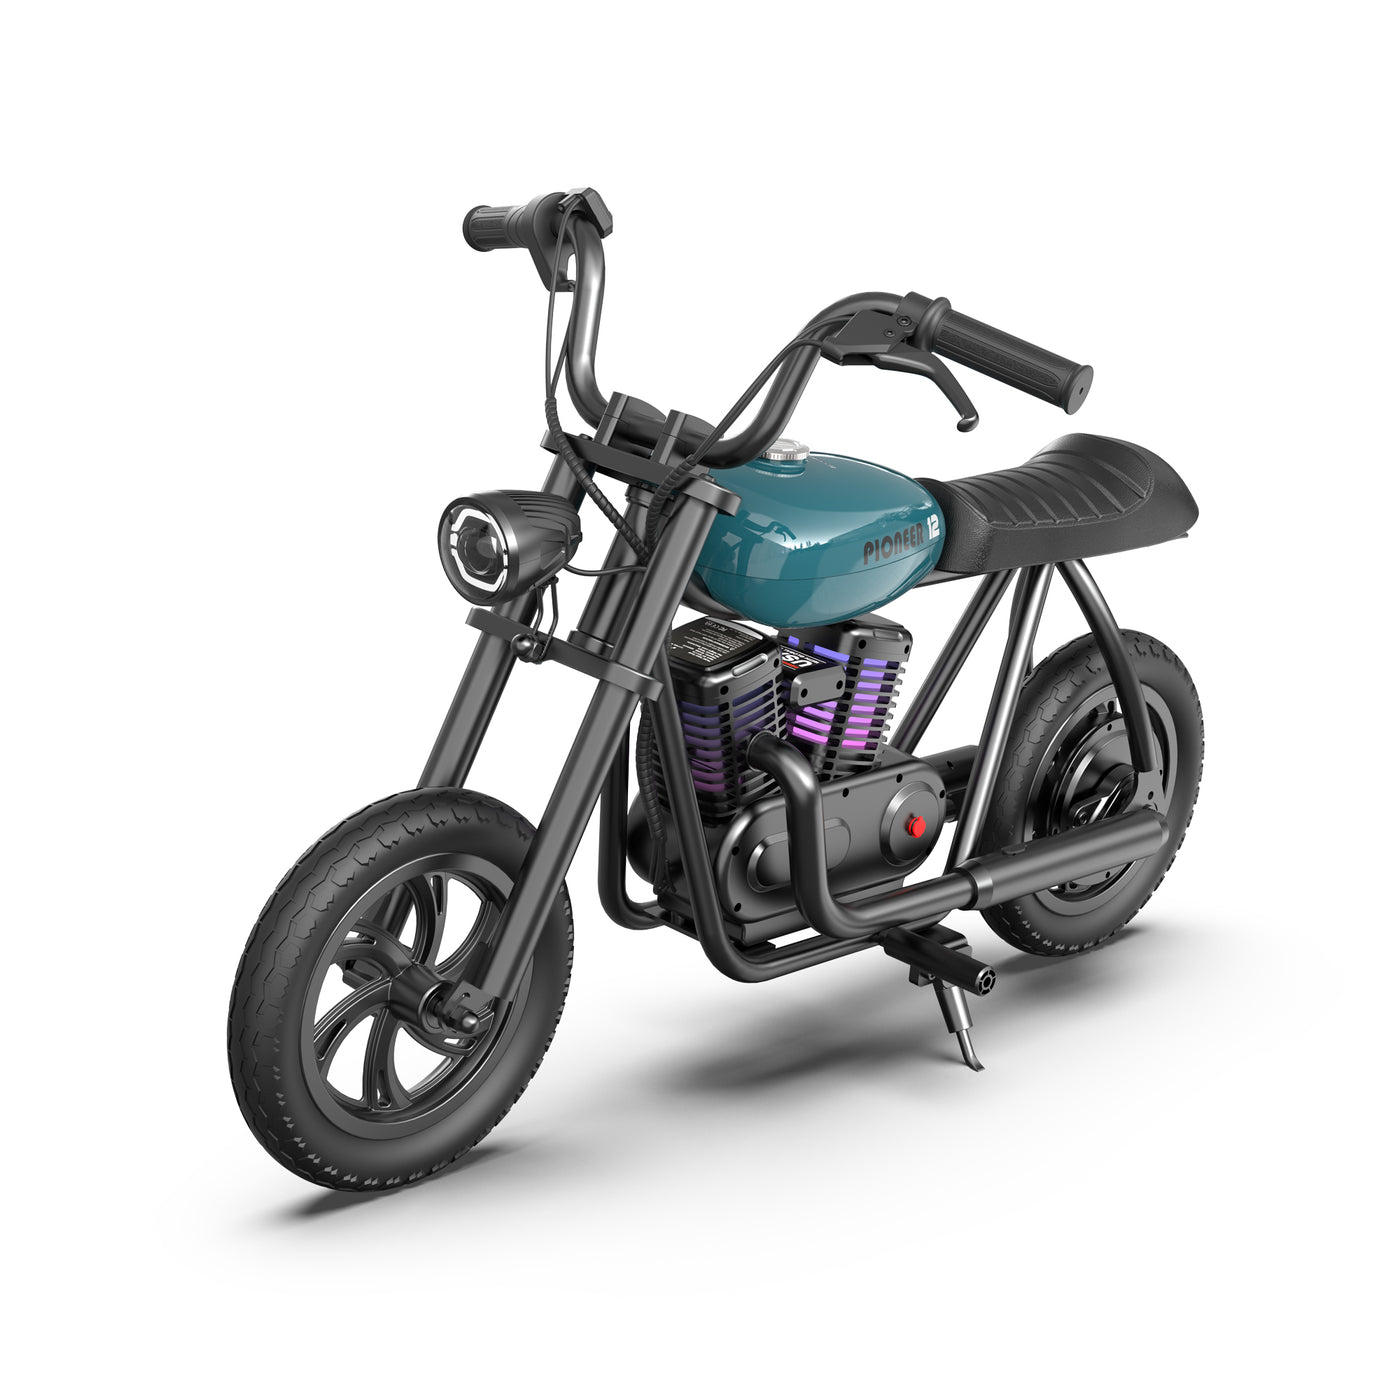 Mini Electric Dirt Bike Motorcycle for Kids with LED Lights, Smoke Effect, Speaker - Pioneer 12 Plus